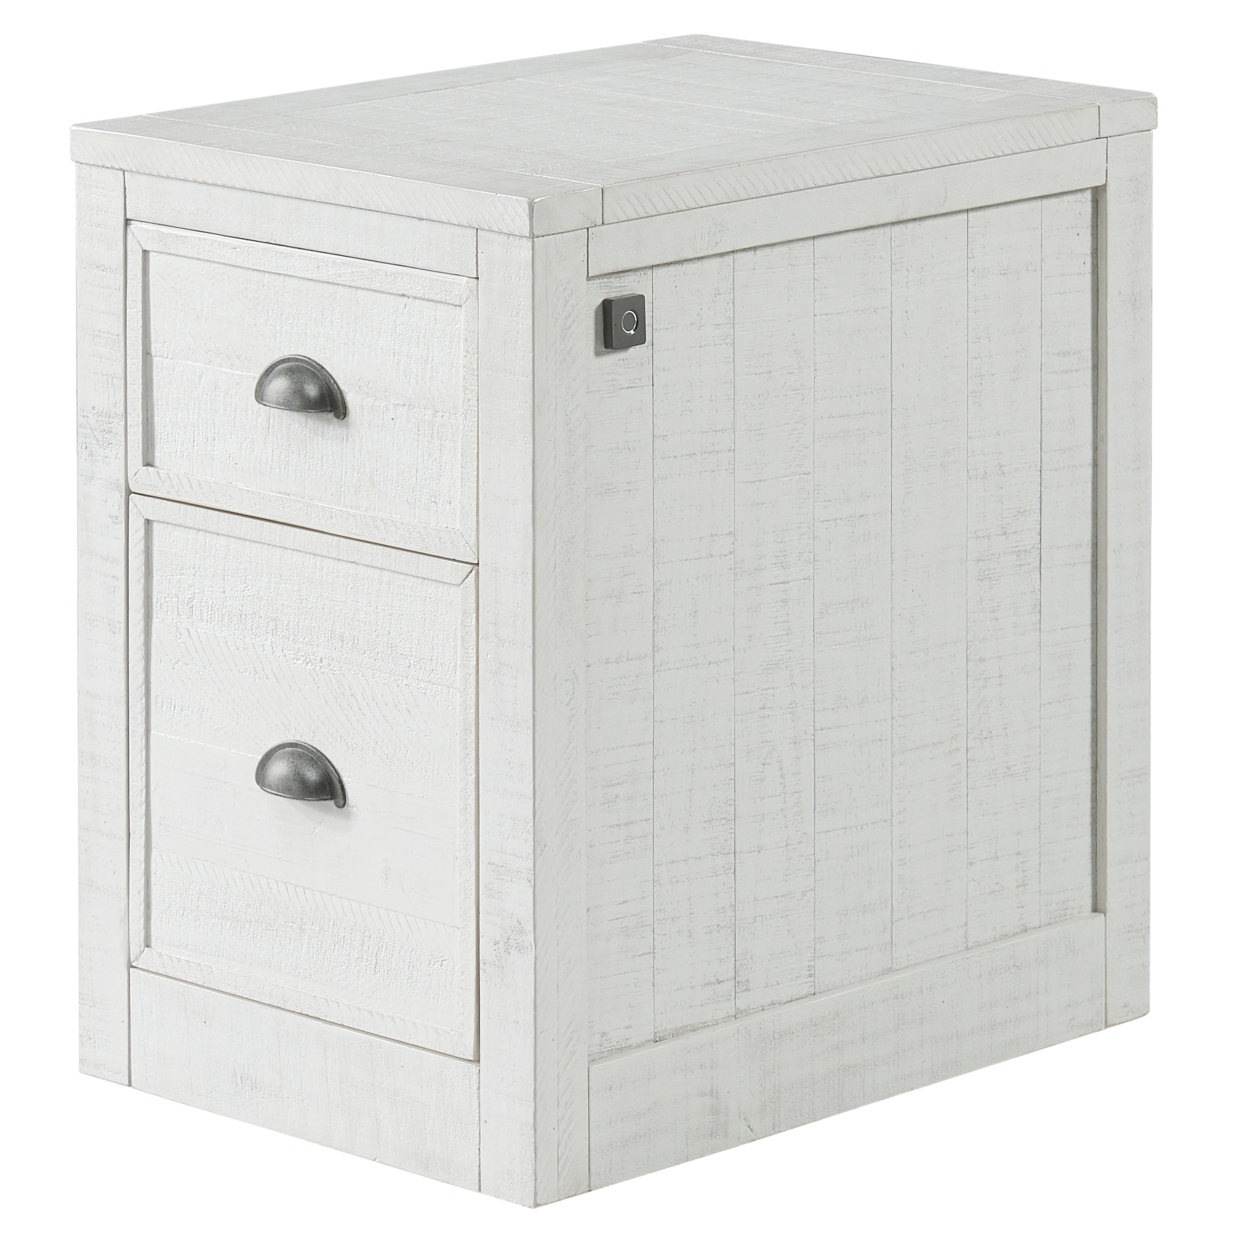 Fiya 24 Inch 2 Drawer Wood File Cabinet With Biometric Lock, White Finish- Saltoro Sherpi